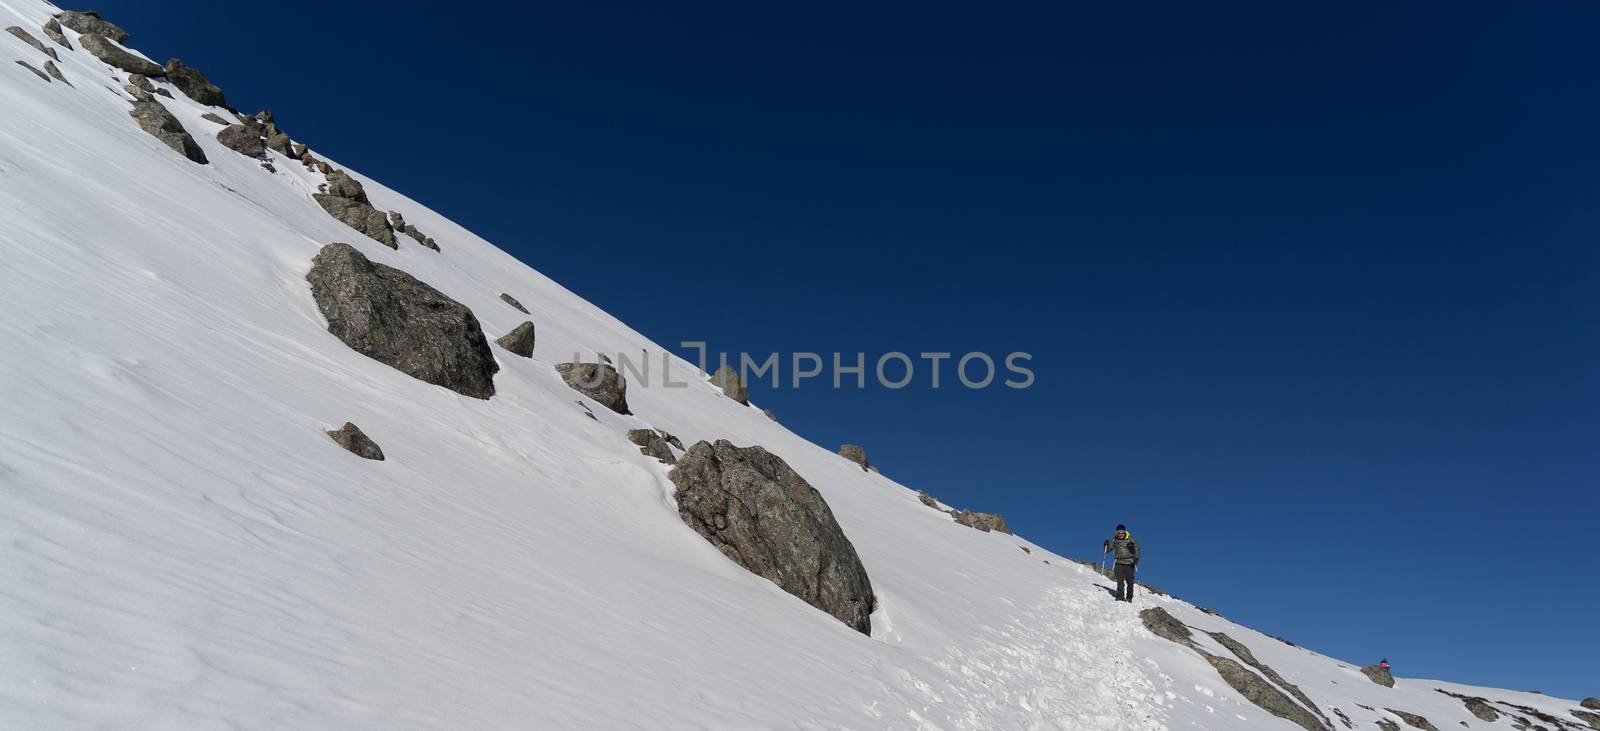 Mountain Himalata Summit in Nepal by javax